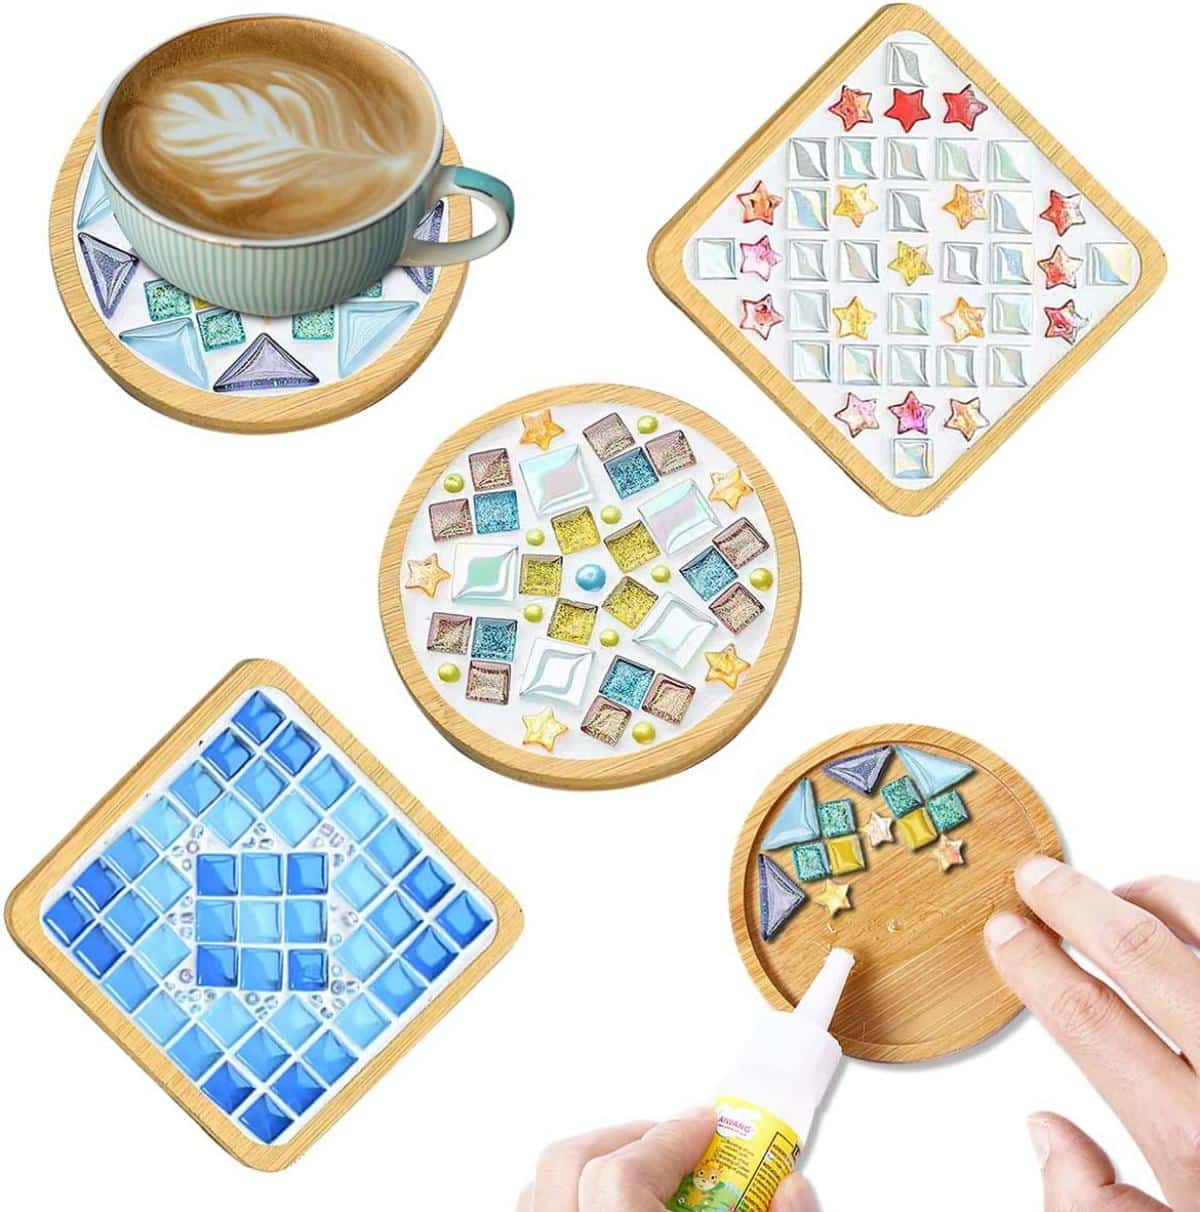 Wathfkcu 4 Sets of DIY Glass Mosaic Tiles for Crafts